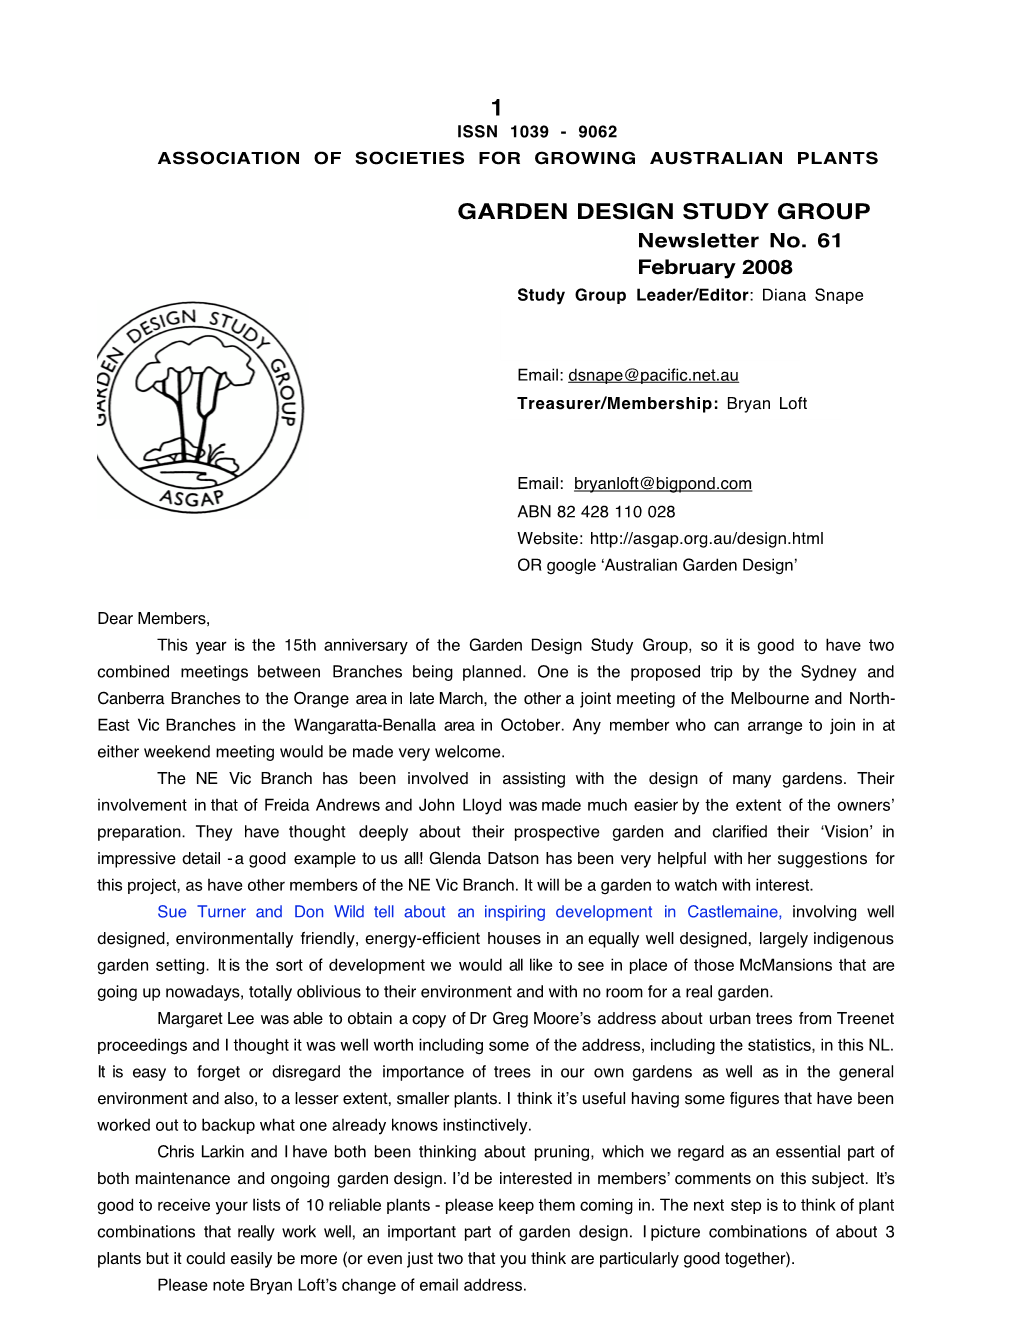 GARDEN DESIGN STUDY GROUP Newsletter No